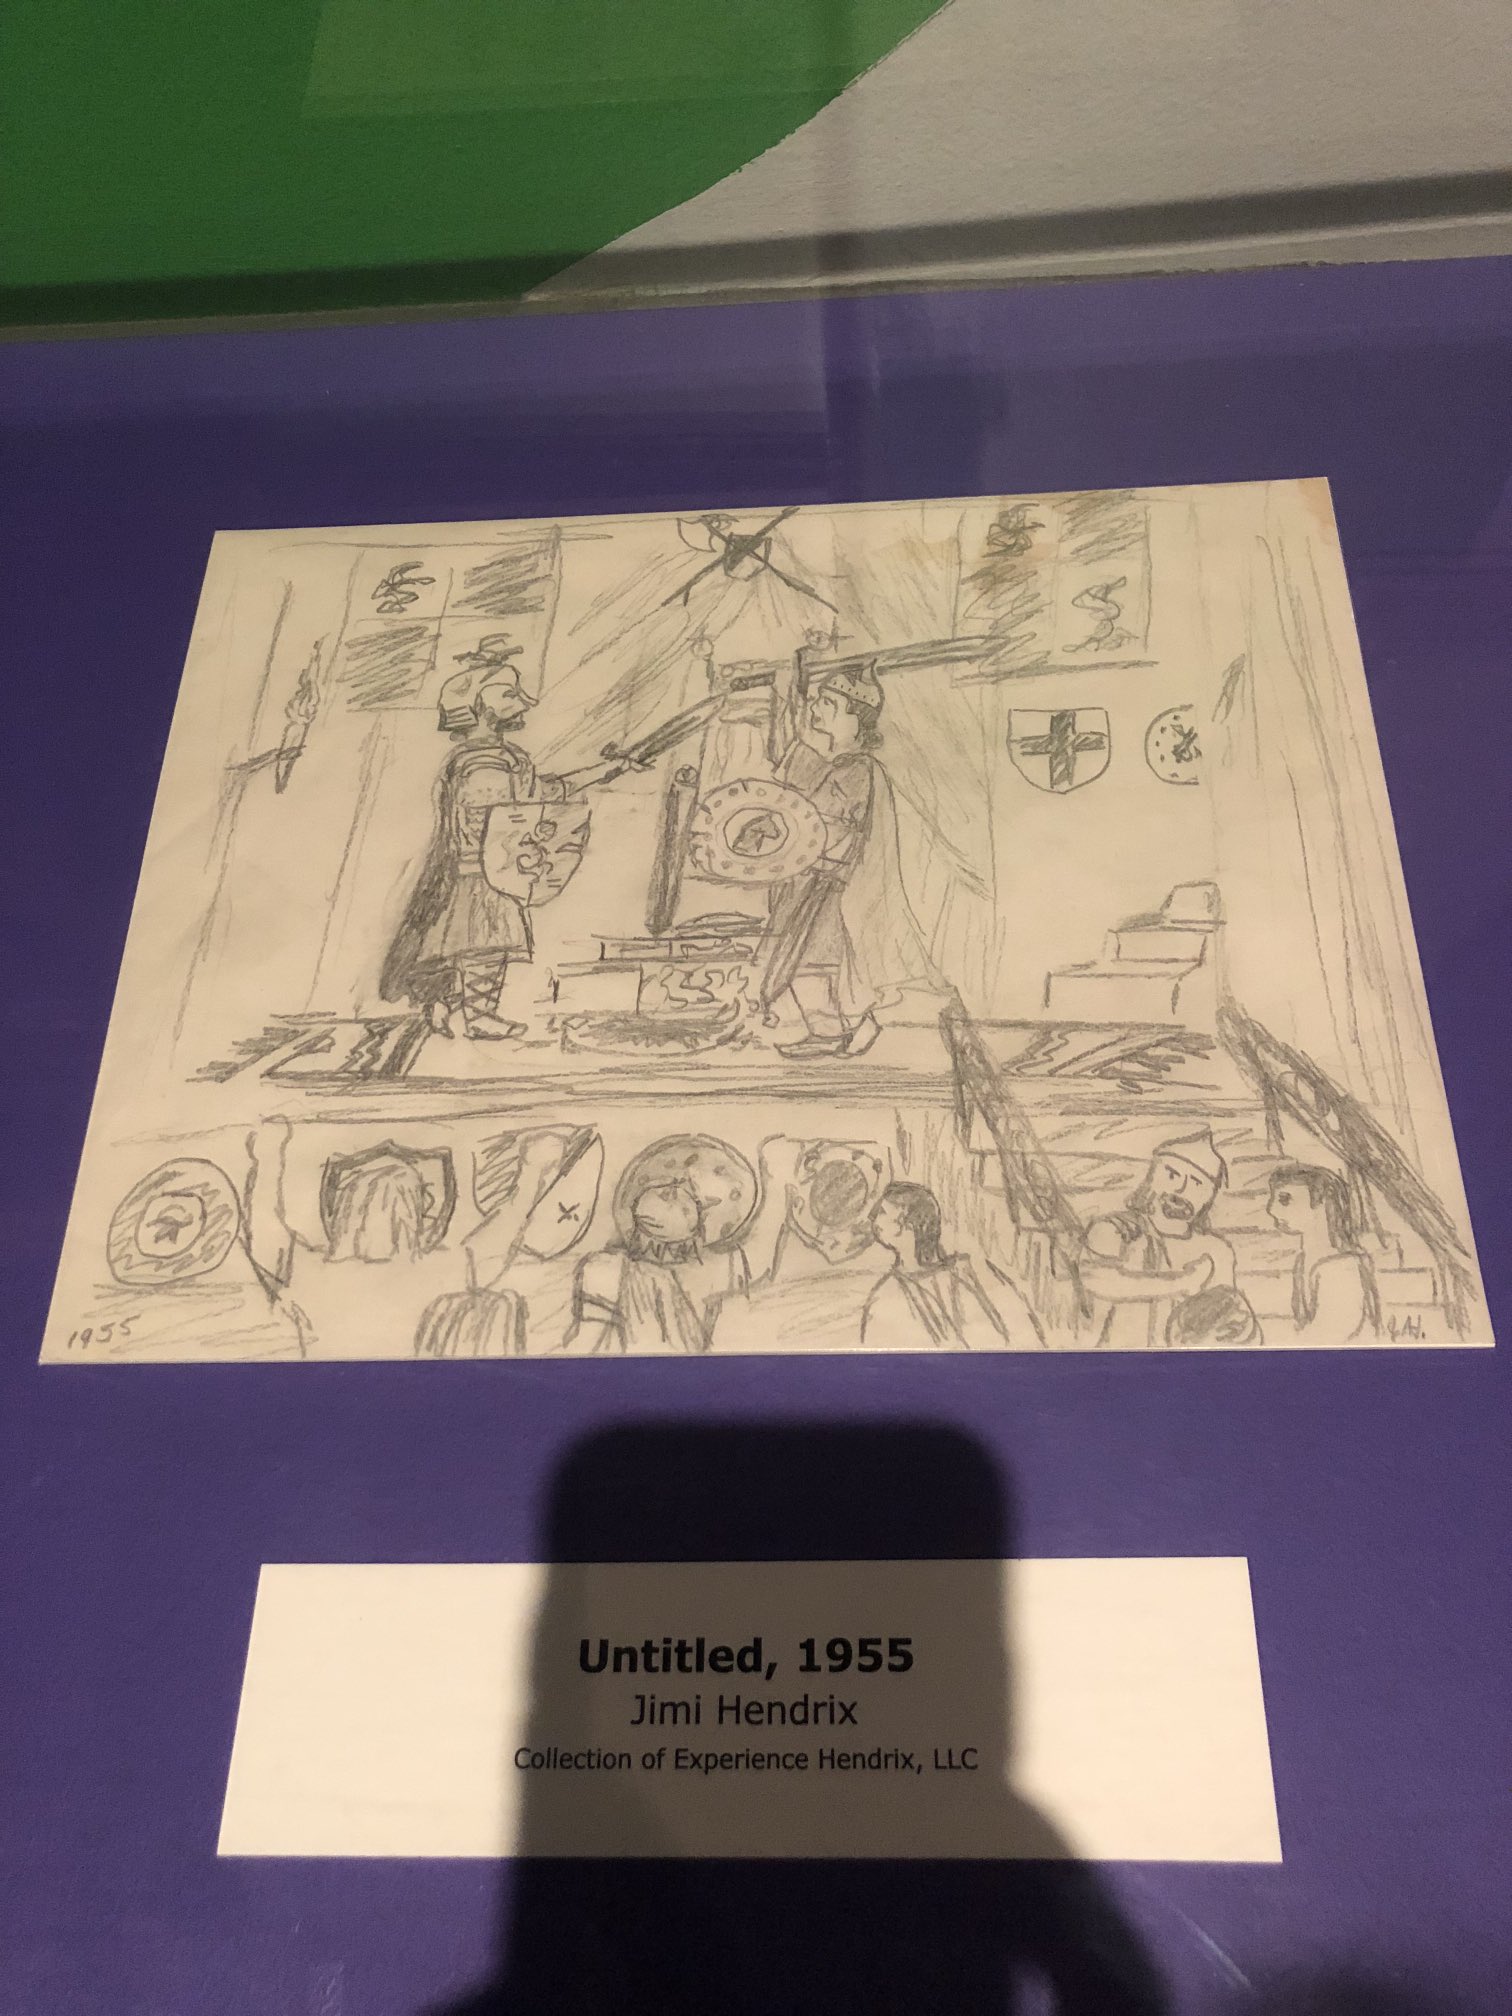 Happy Birthday Jimi Hendrix.       His school drawings on display at Rock n Roll Hall of Fame 